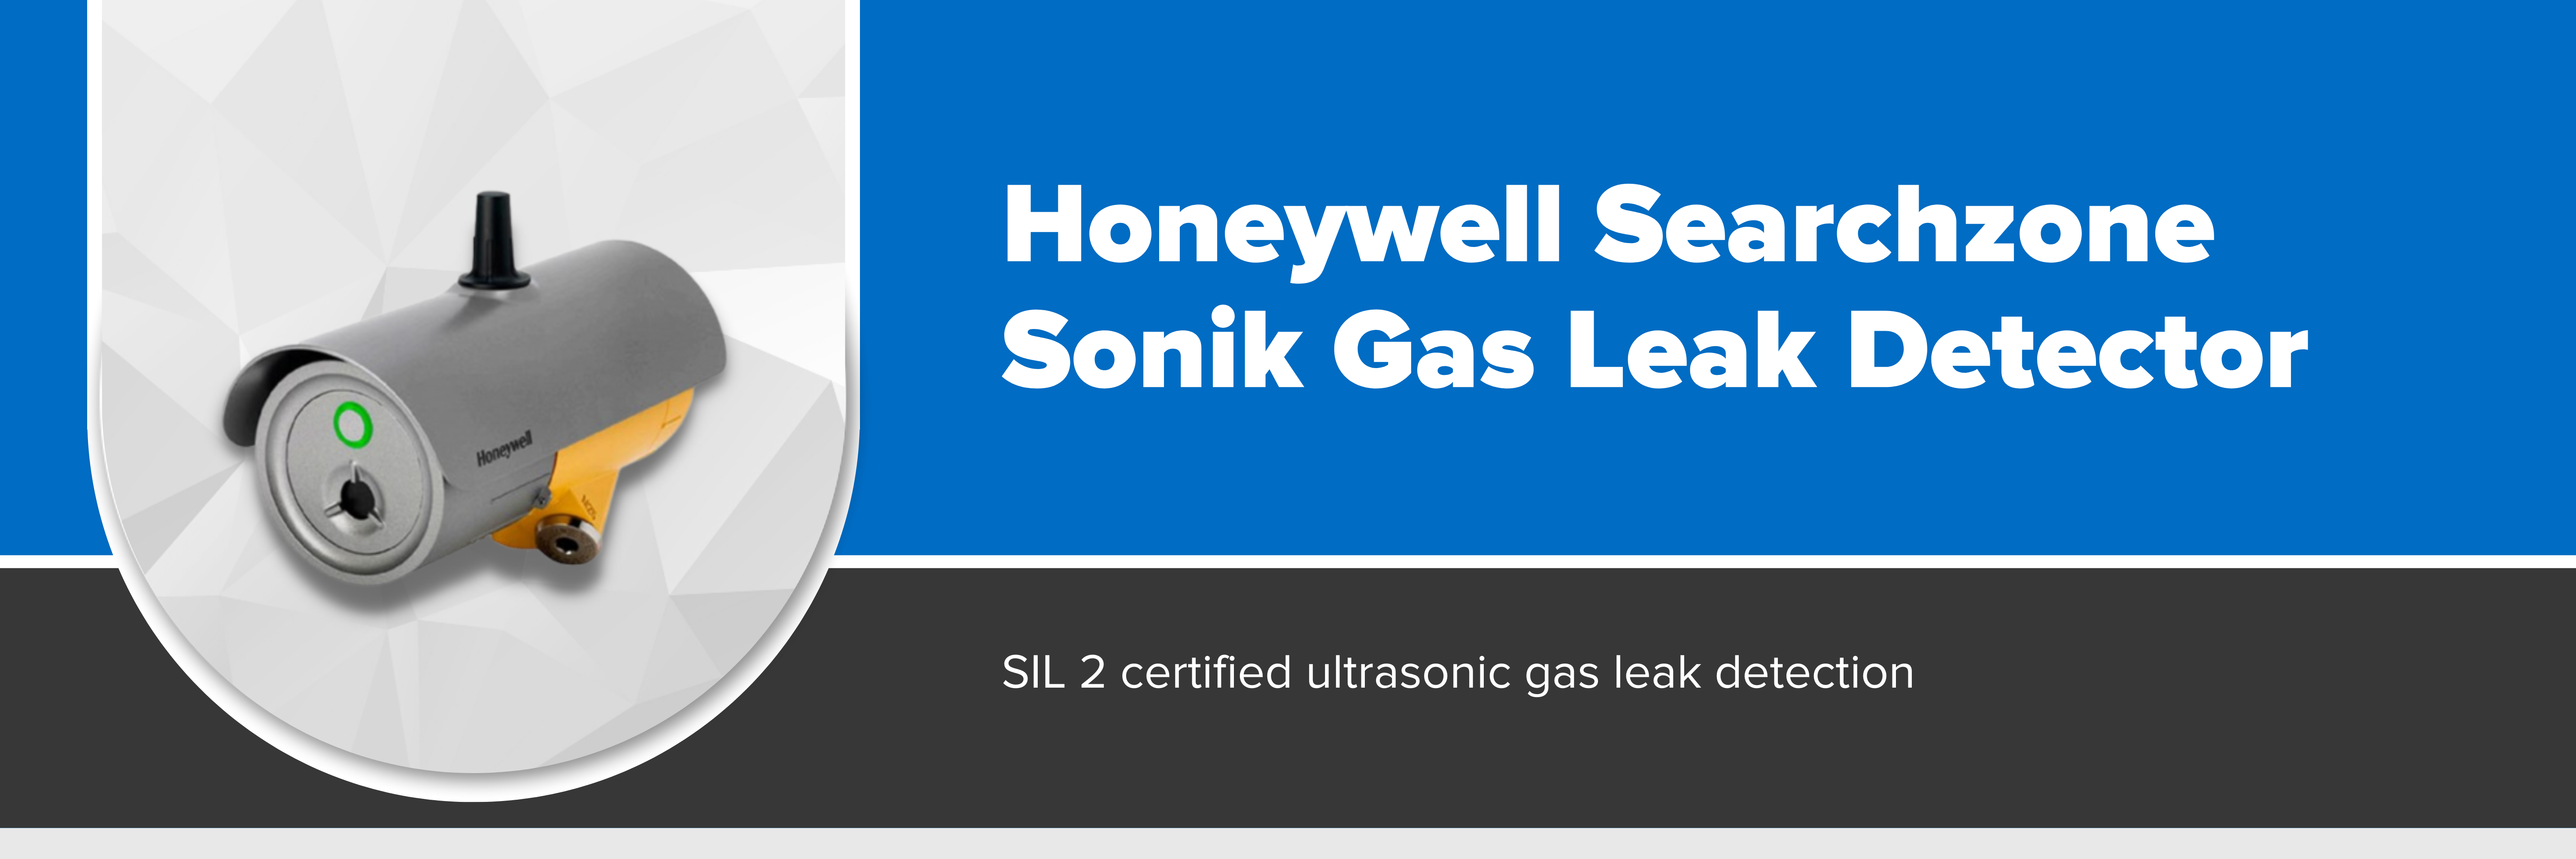 Header image with text "Honeywell Searchzone Sonik Ultrasonic Gas Leak Detector"